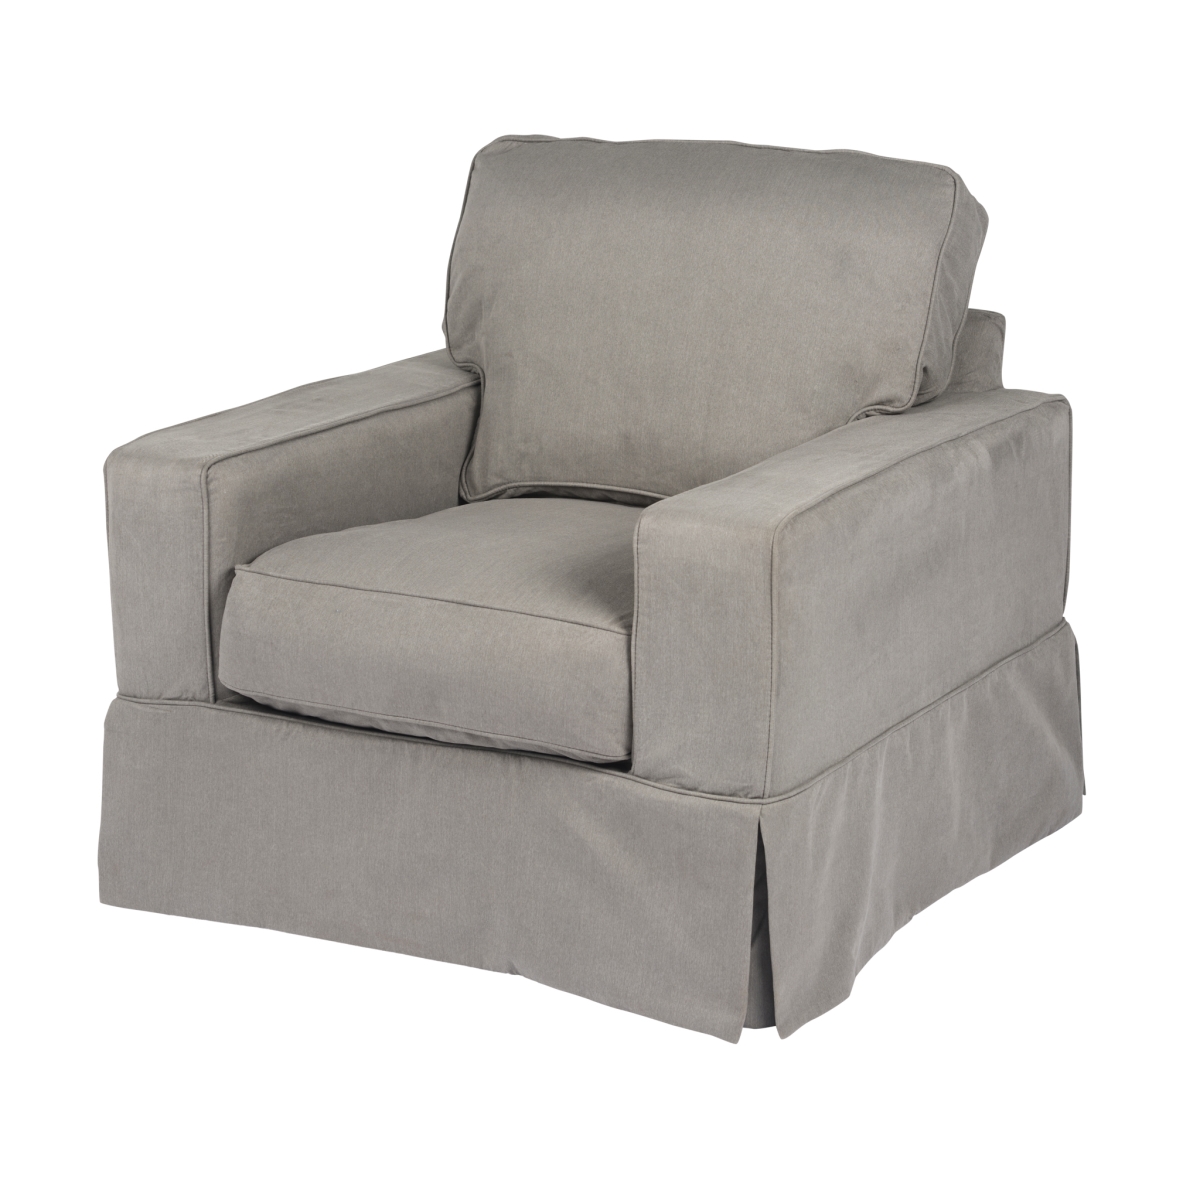 Su-108520sc-391094 Americana Chair Slipcover Set, Peyton Slate